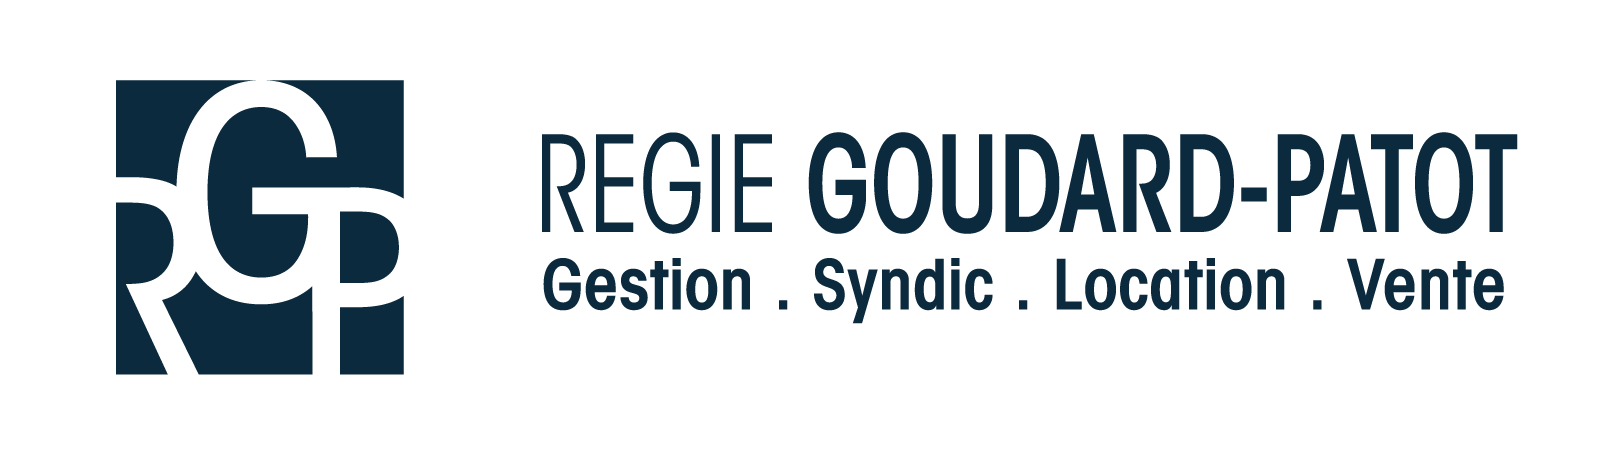 le Logo de la REGIE GOUDARD-PATOT